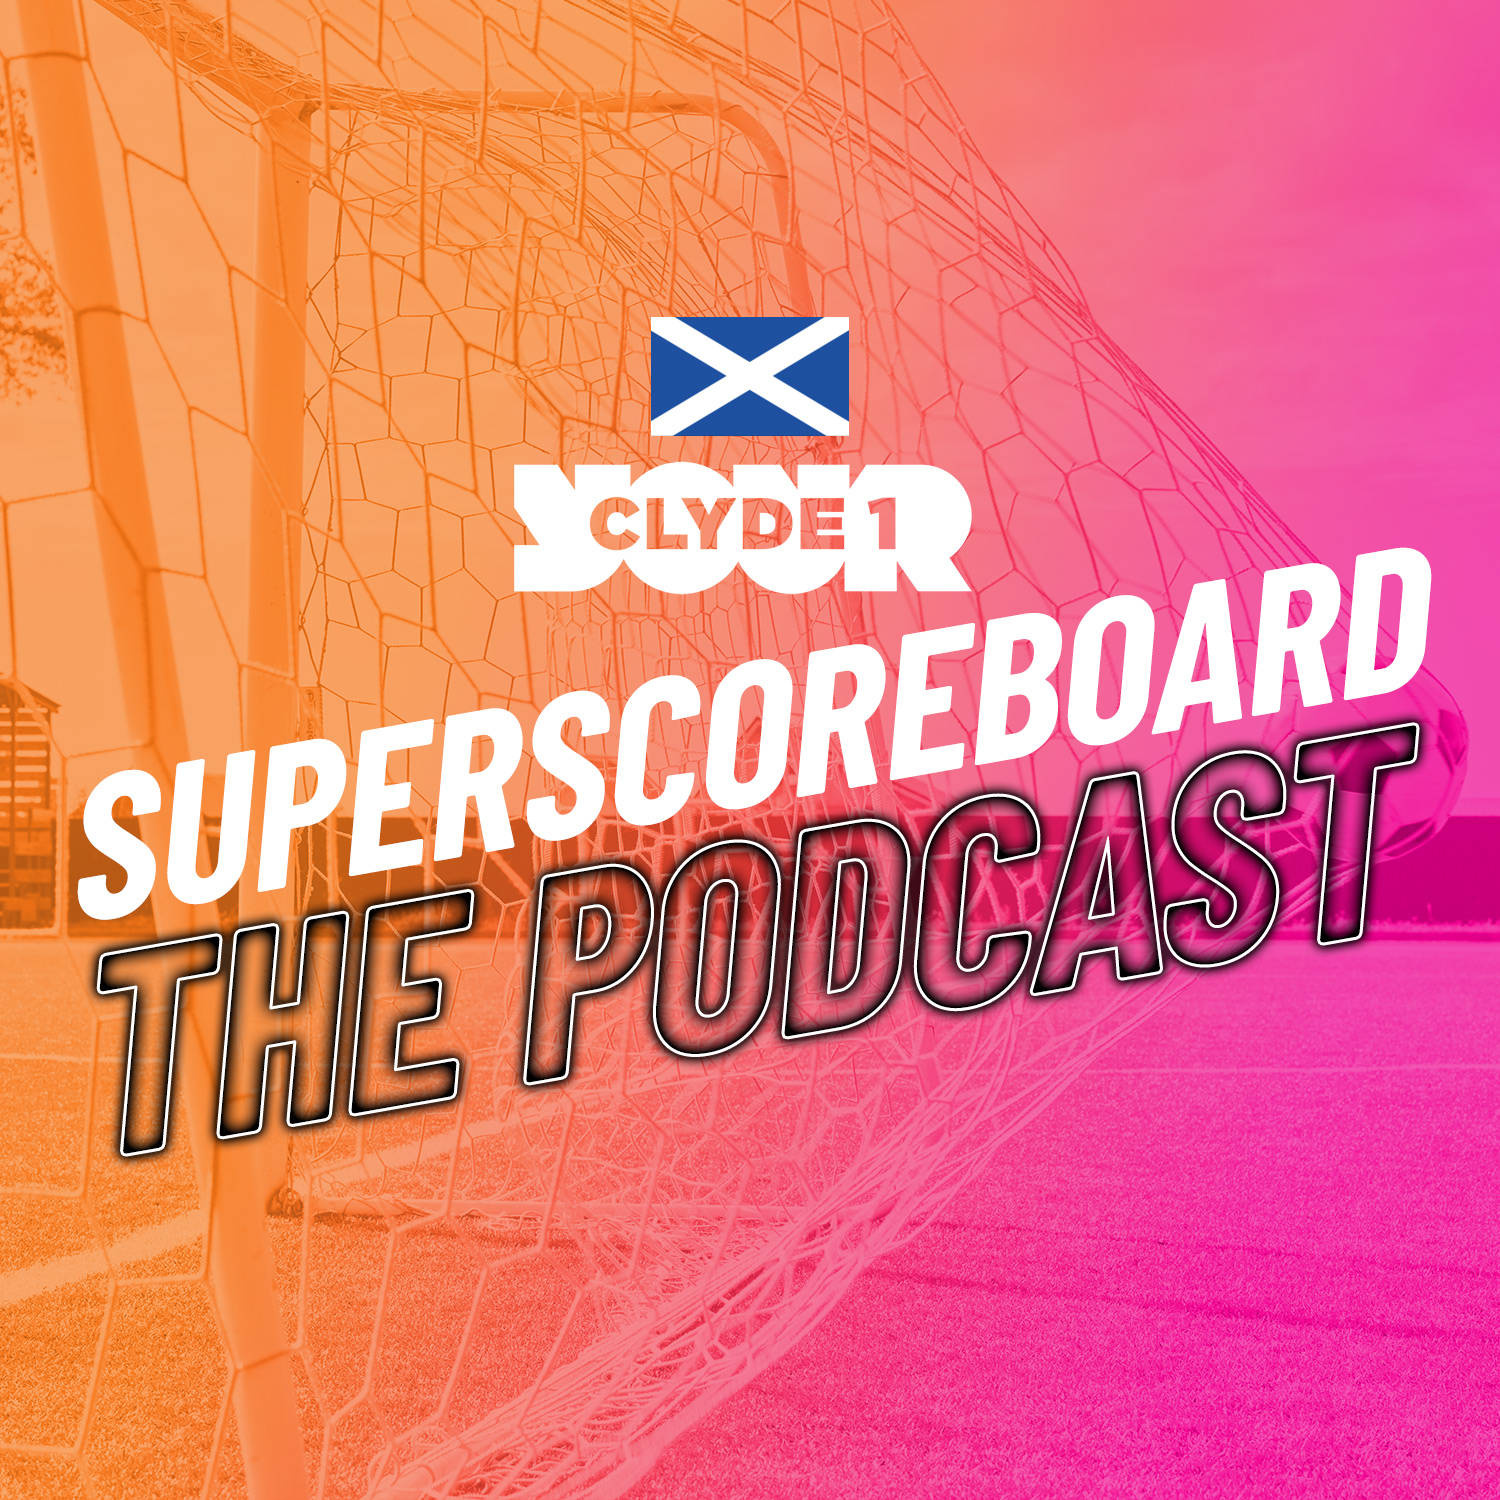 Thursday 29th February Clyde 1 Superscoreboard